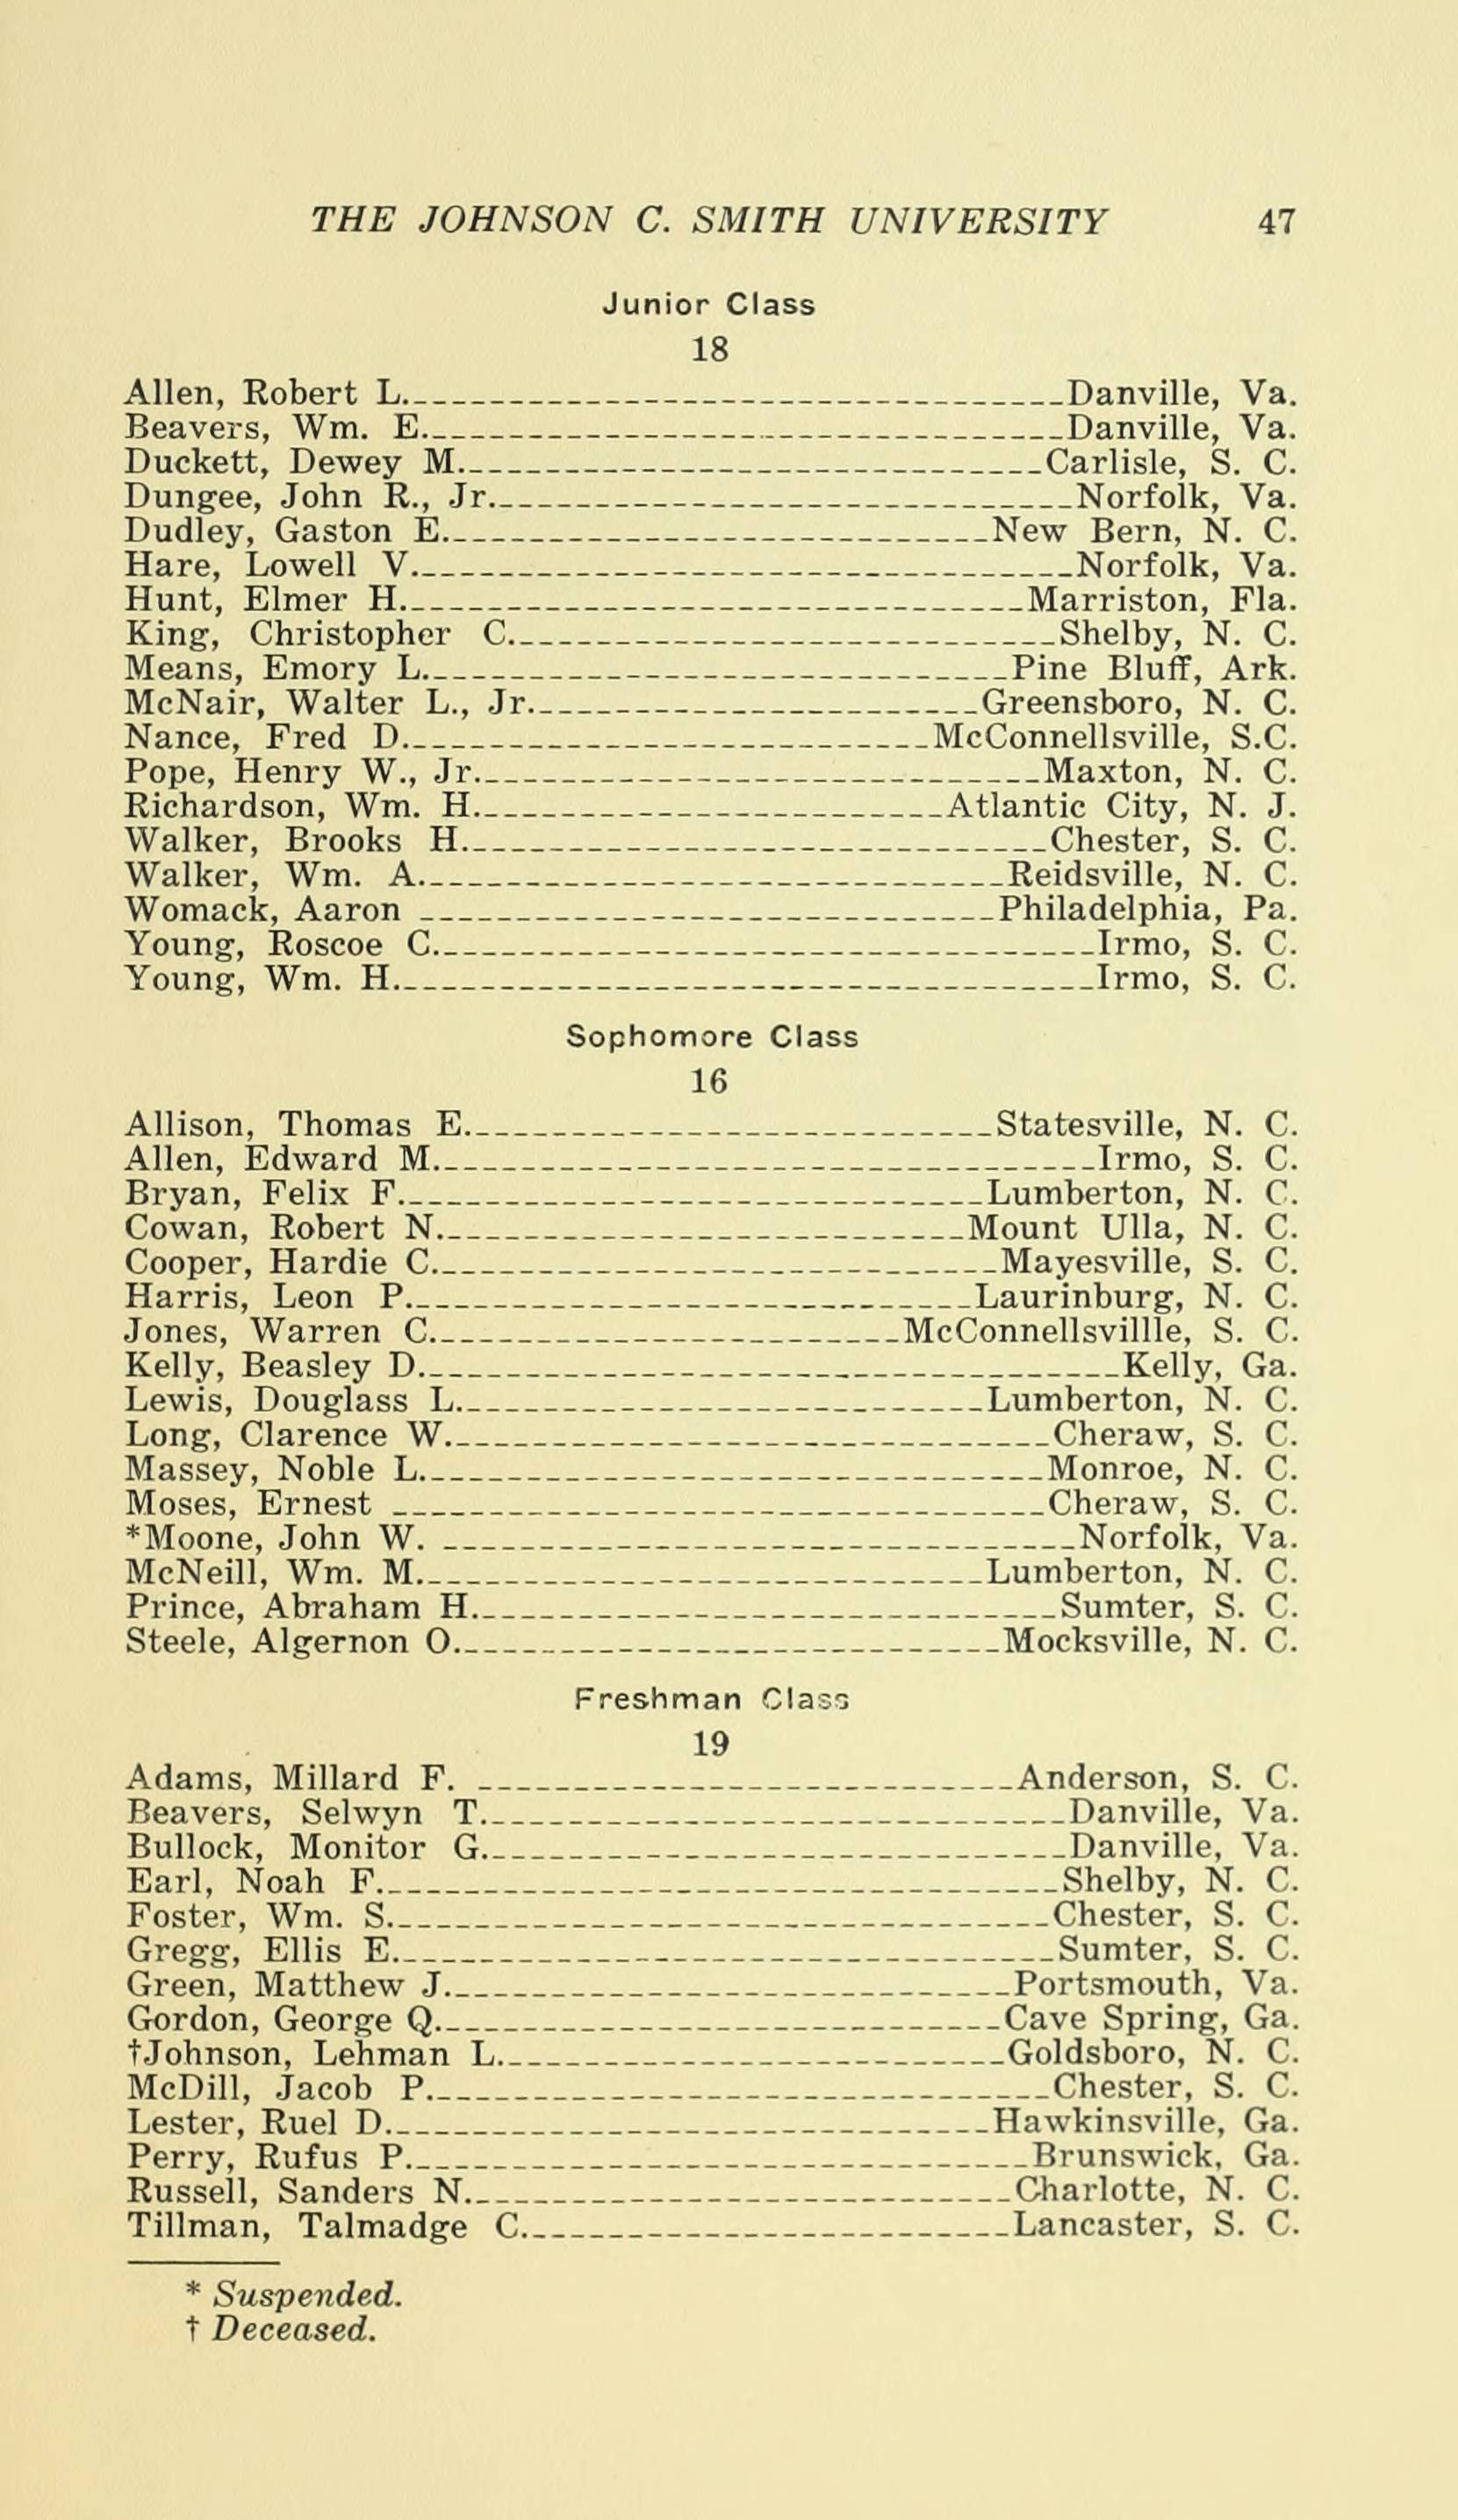 Johnson C. Smith University General Catalog [19211922]